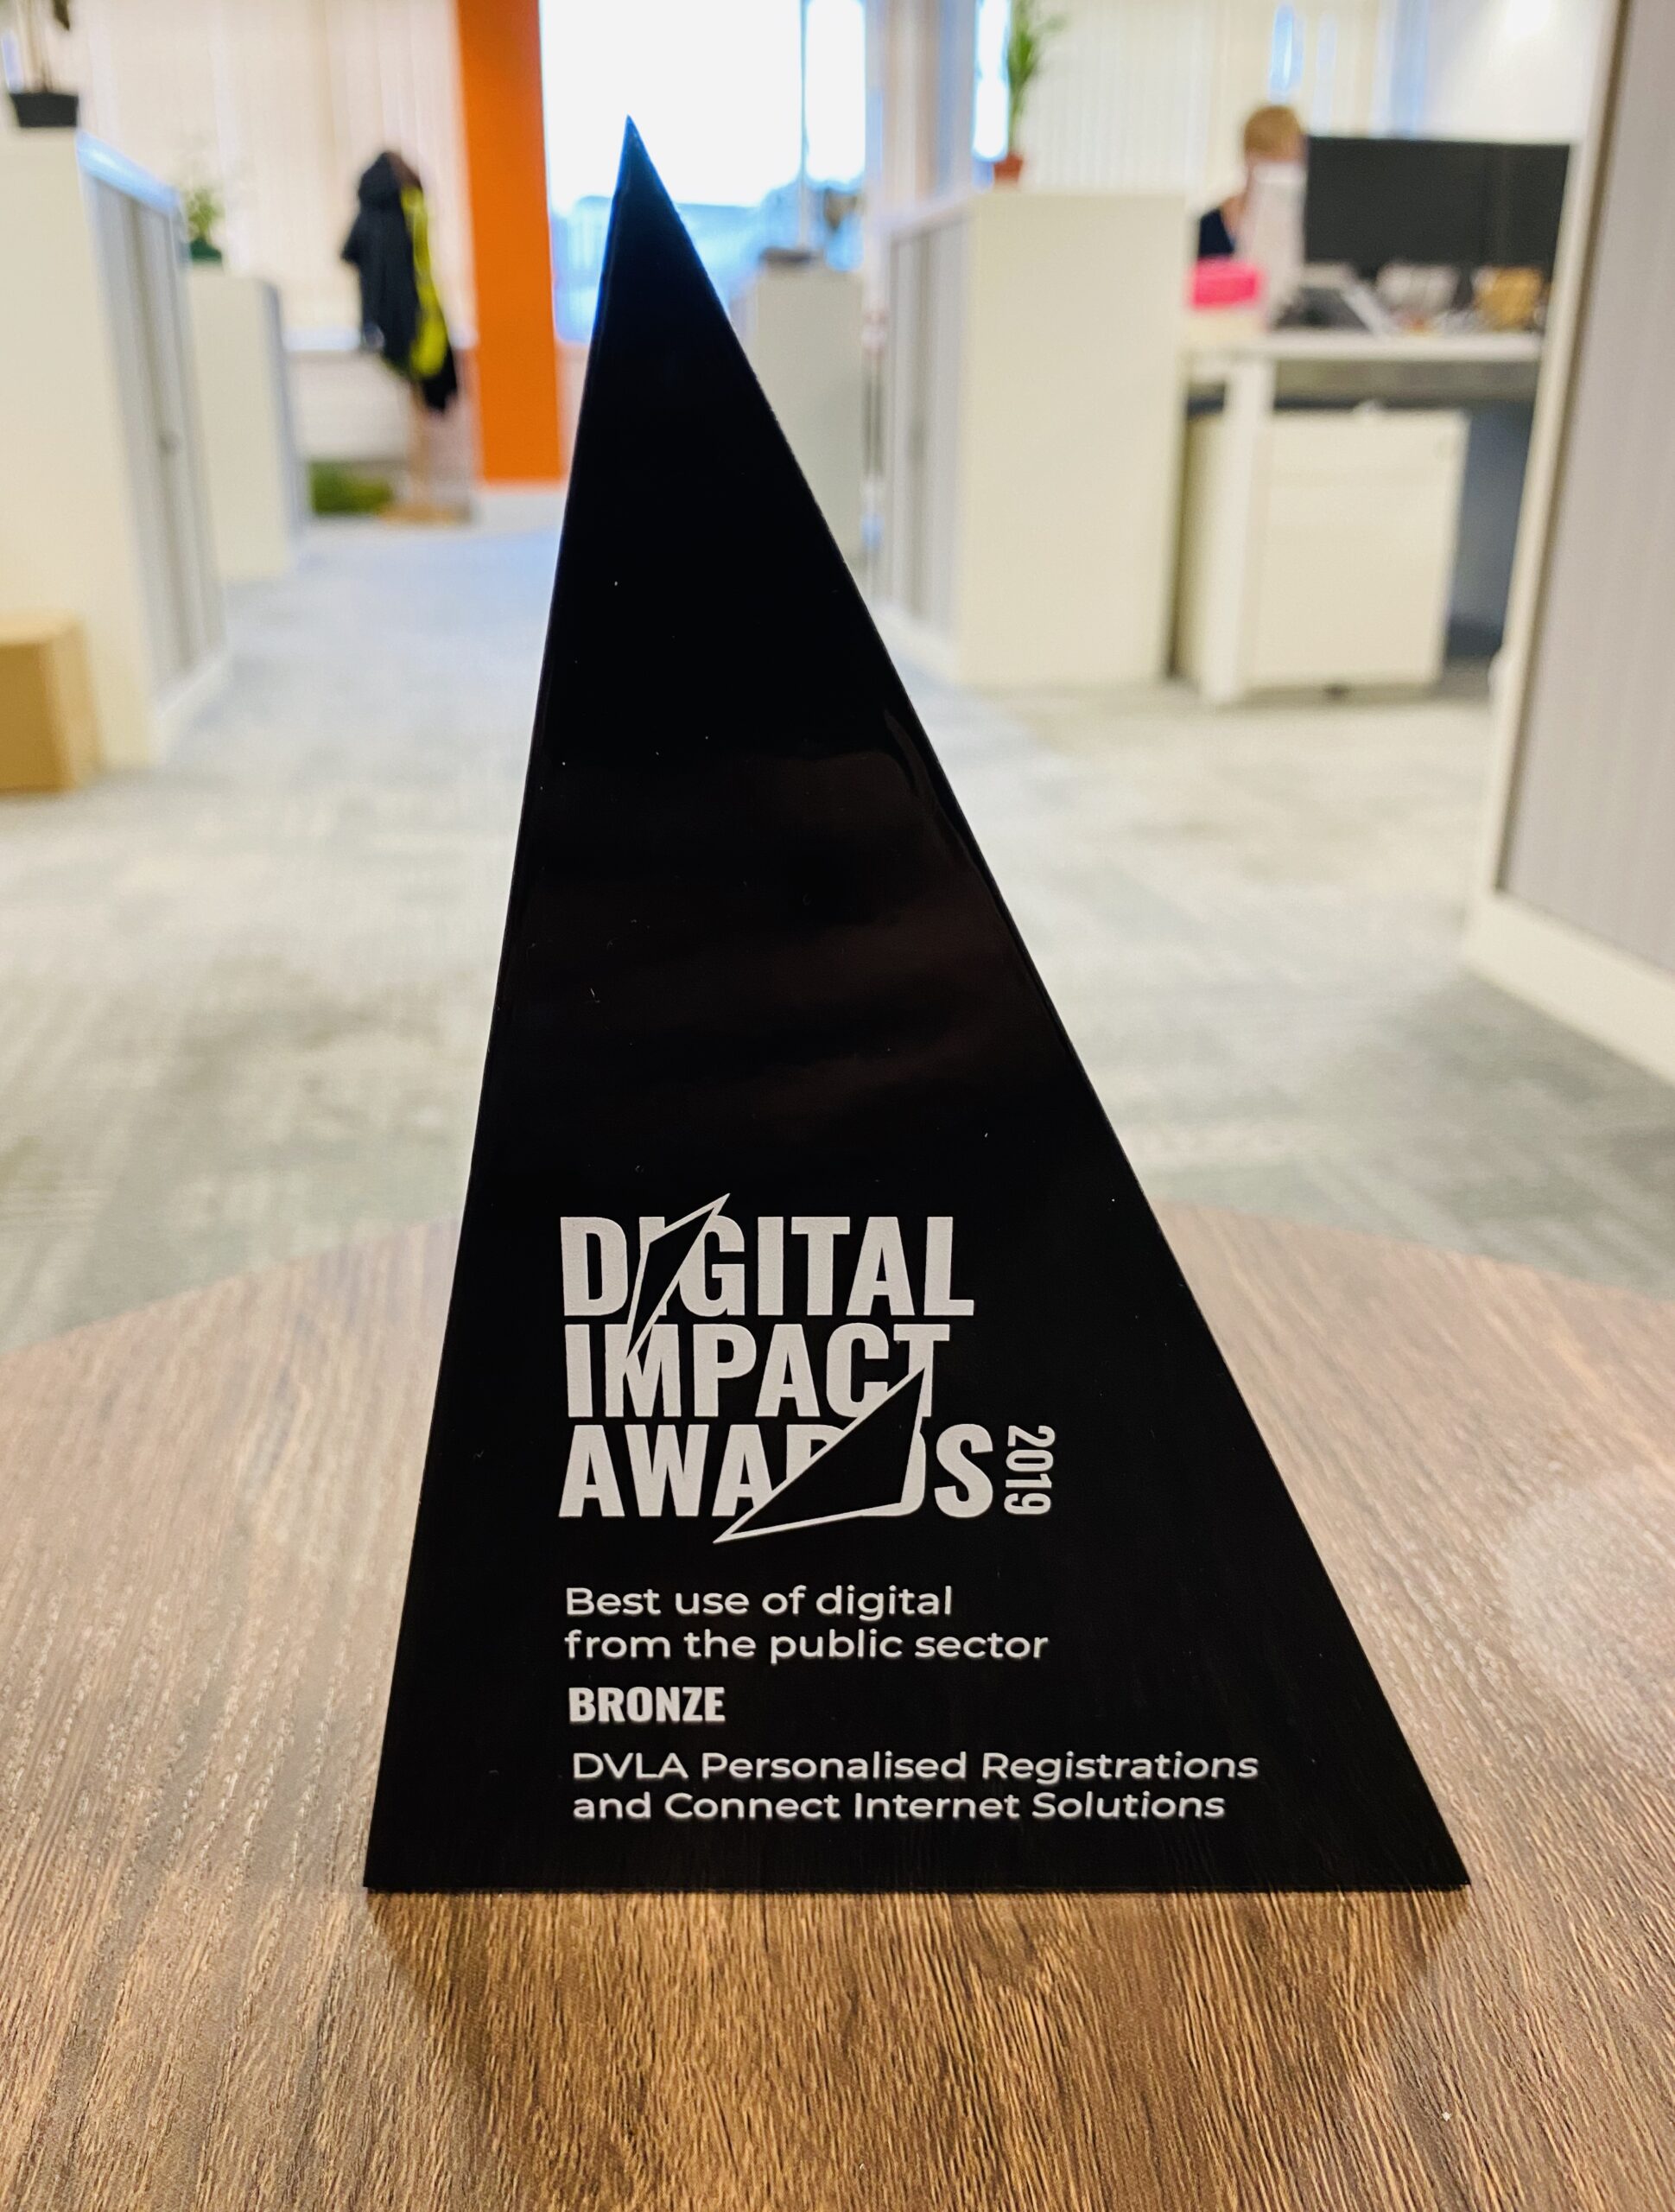 Digital Impact Awards 2019 - Bronze Winner